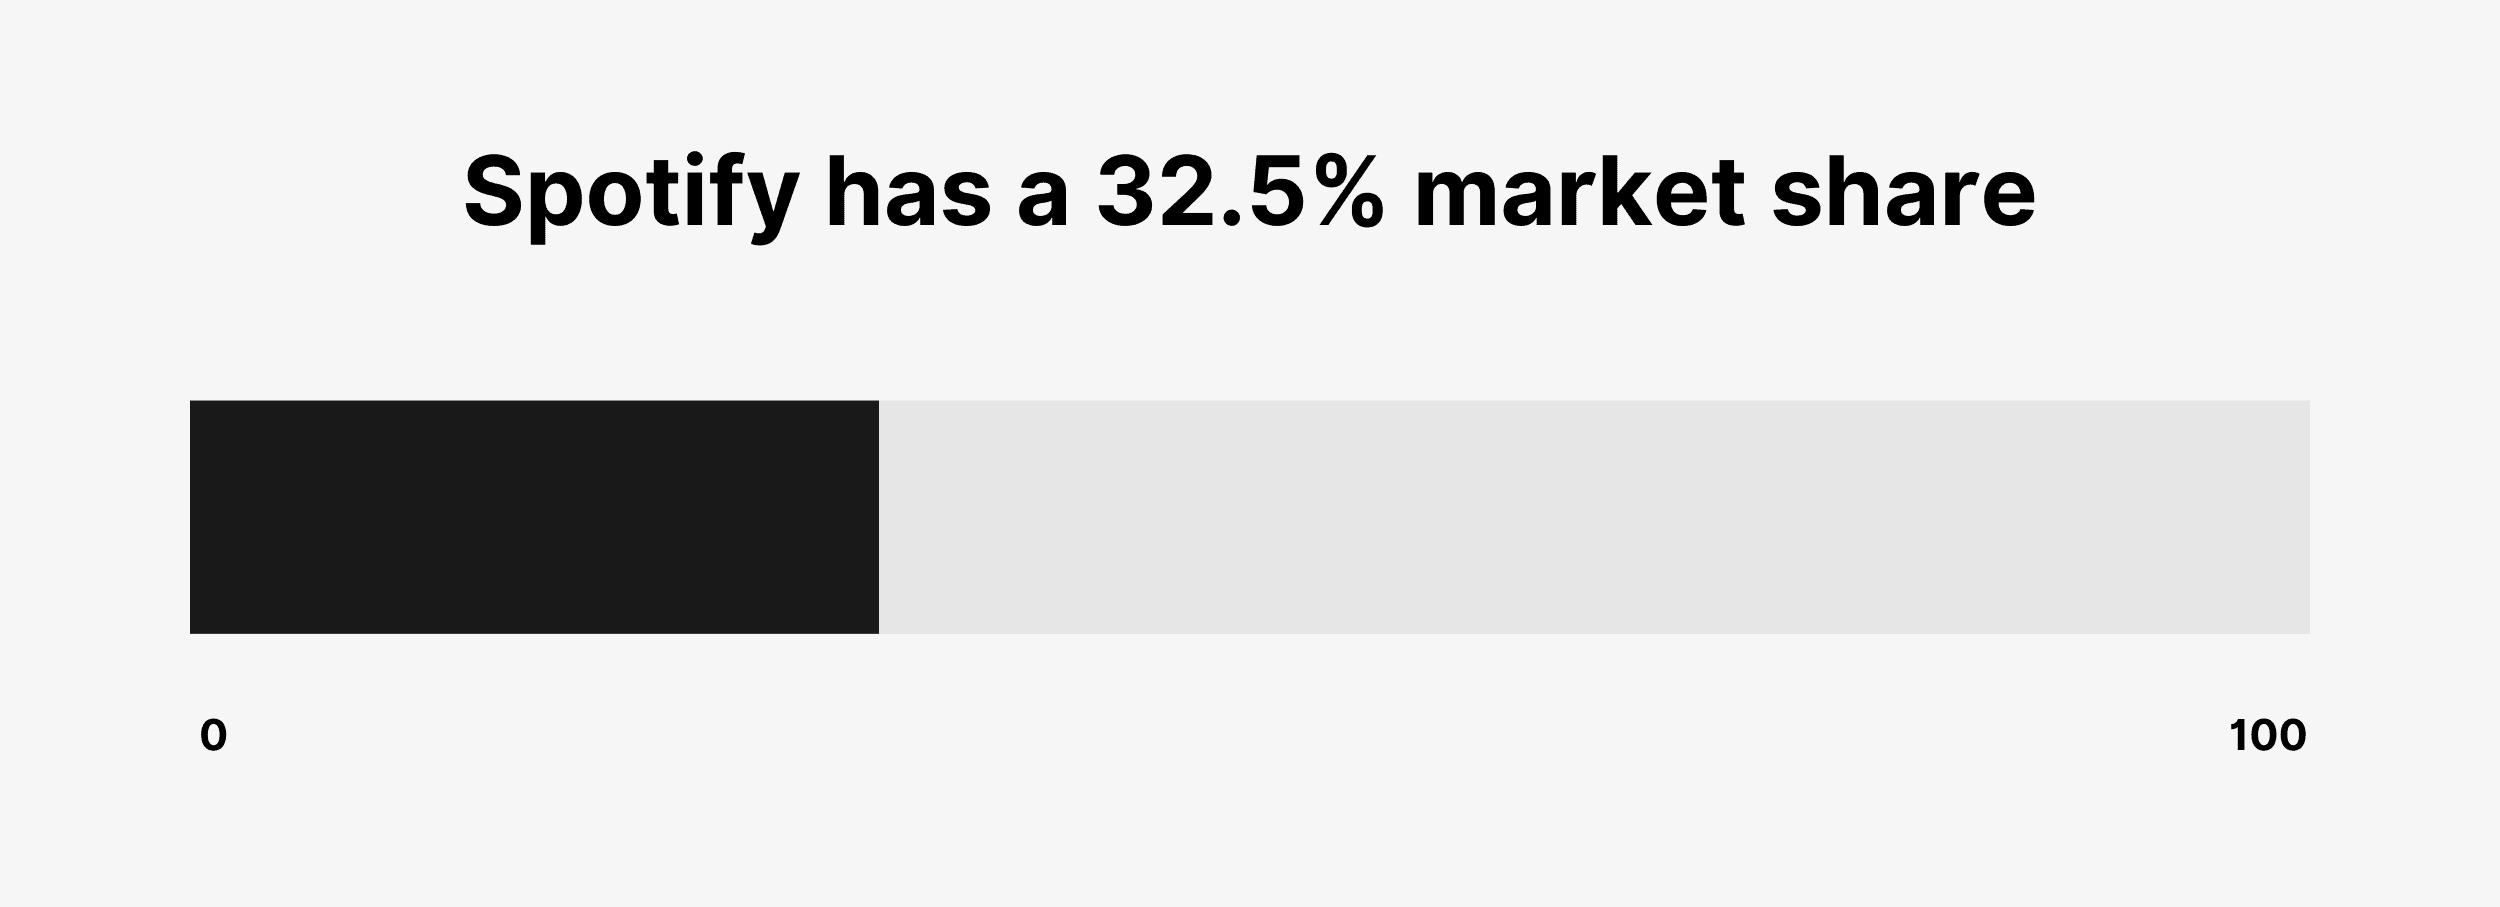 Spotify has a 32.5% market share